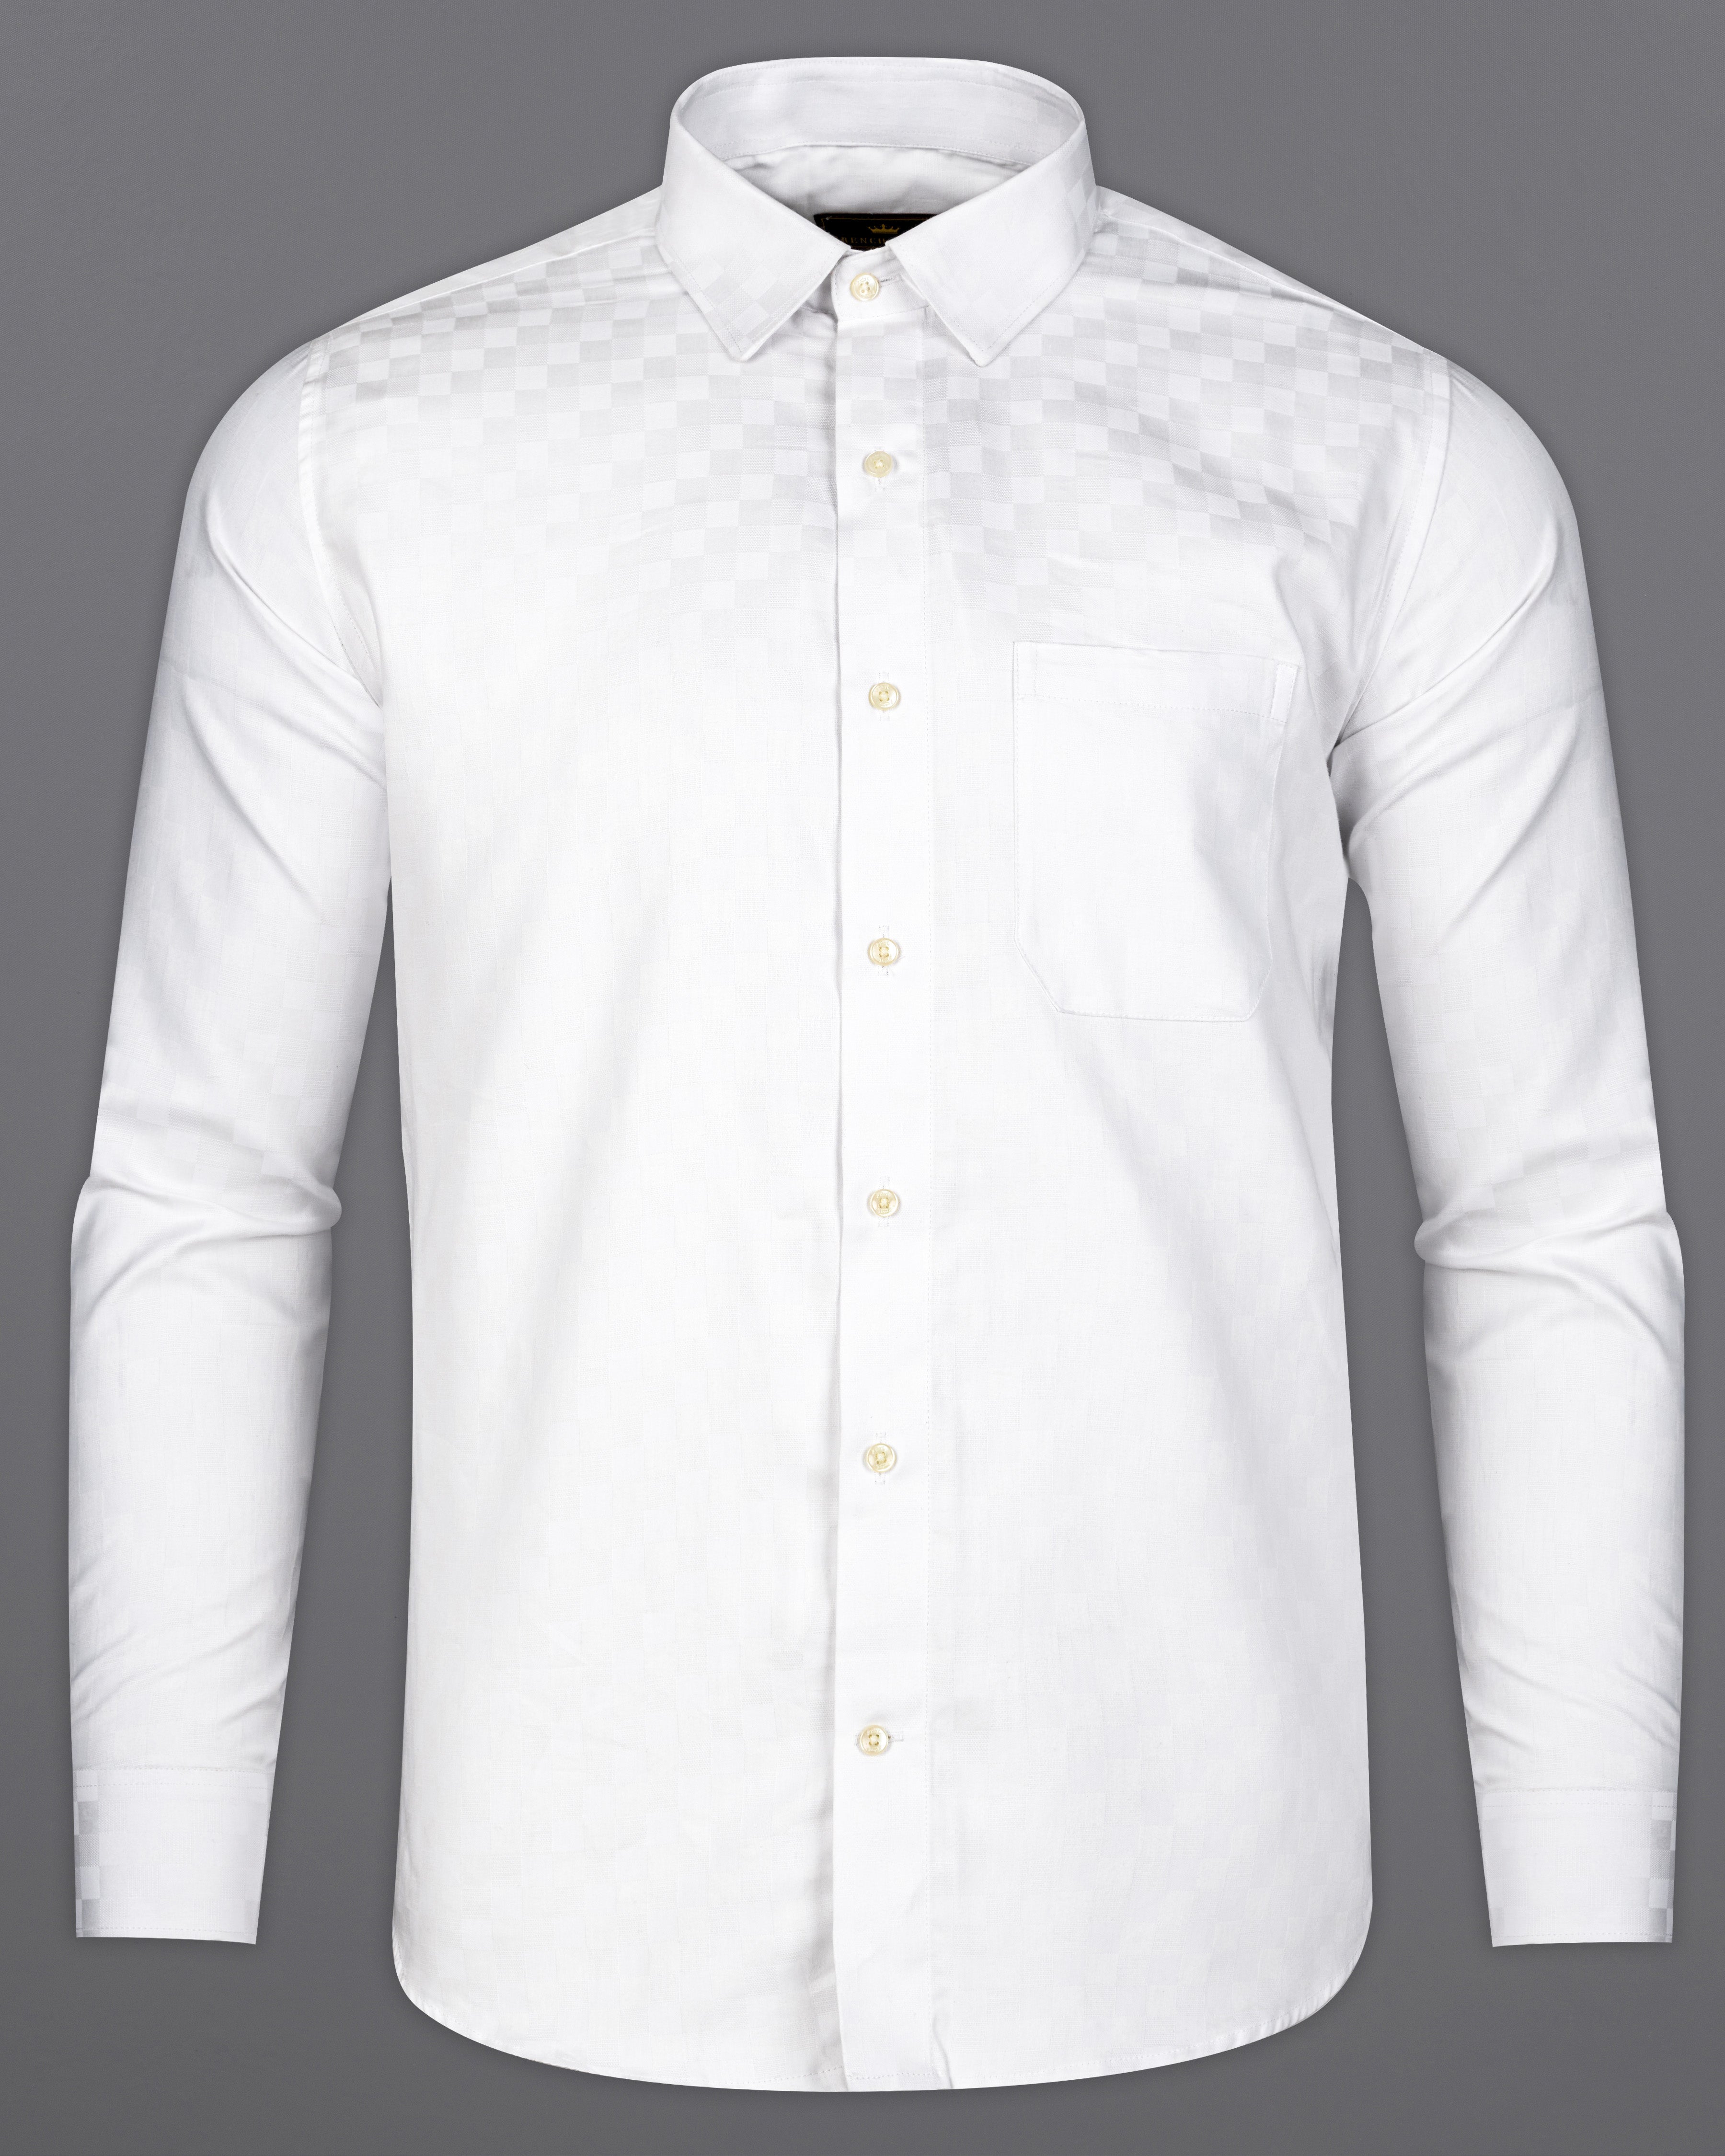 Bright White Checked Dobby Textured Premium Giza Cotton Shirt 9580-38, 9580-H-38, 9580-39, 9580-H-39, 9580-40, 9580-H-40, 9580-42, 9580-H-42, 9580-44, 9580-H-44, 9580-46, 9580-H-46, 9580-48, 9580-H-48, 9580-50, 9580-H-50, 9580-52, 9580-H-52